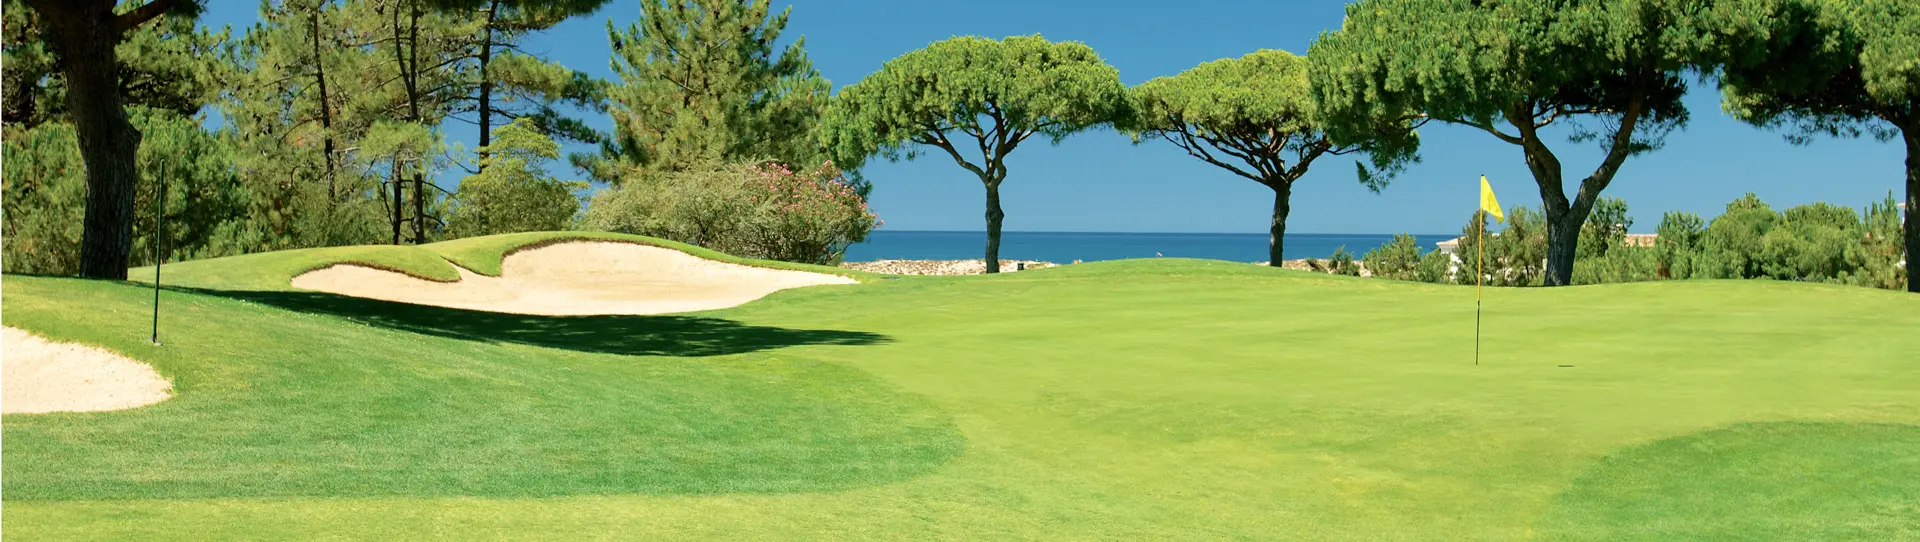 Portugal golf holidays - San Lorenzo 3 Rounds - Photo 1